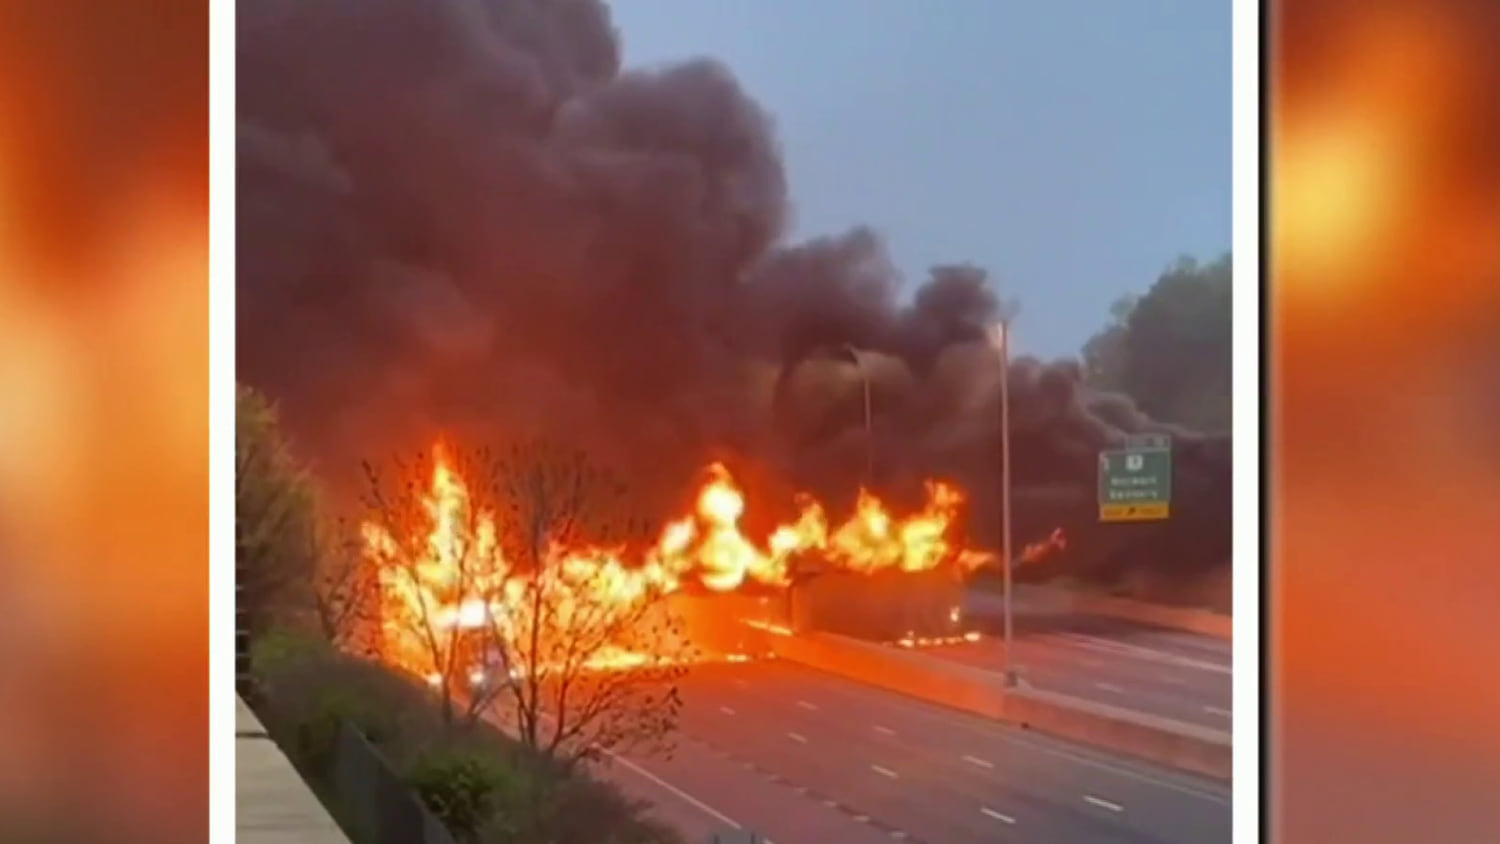 Part of major Northeast highway shut down after fiery truck crash